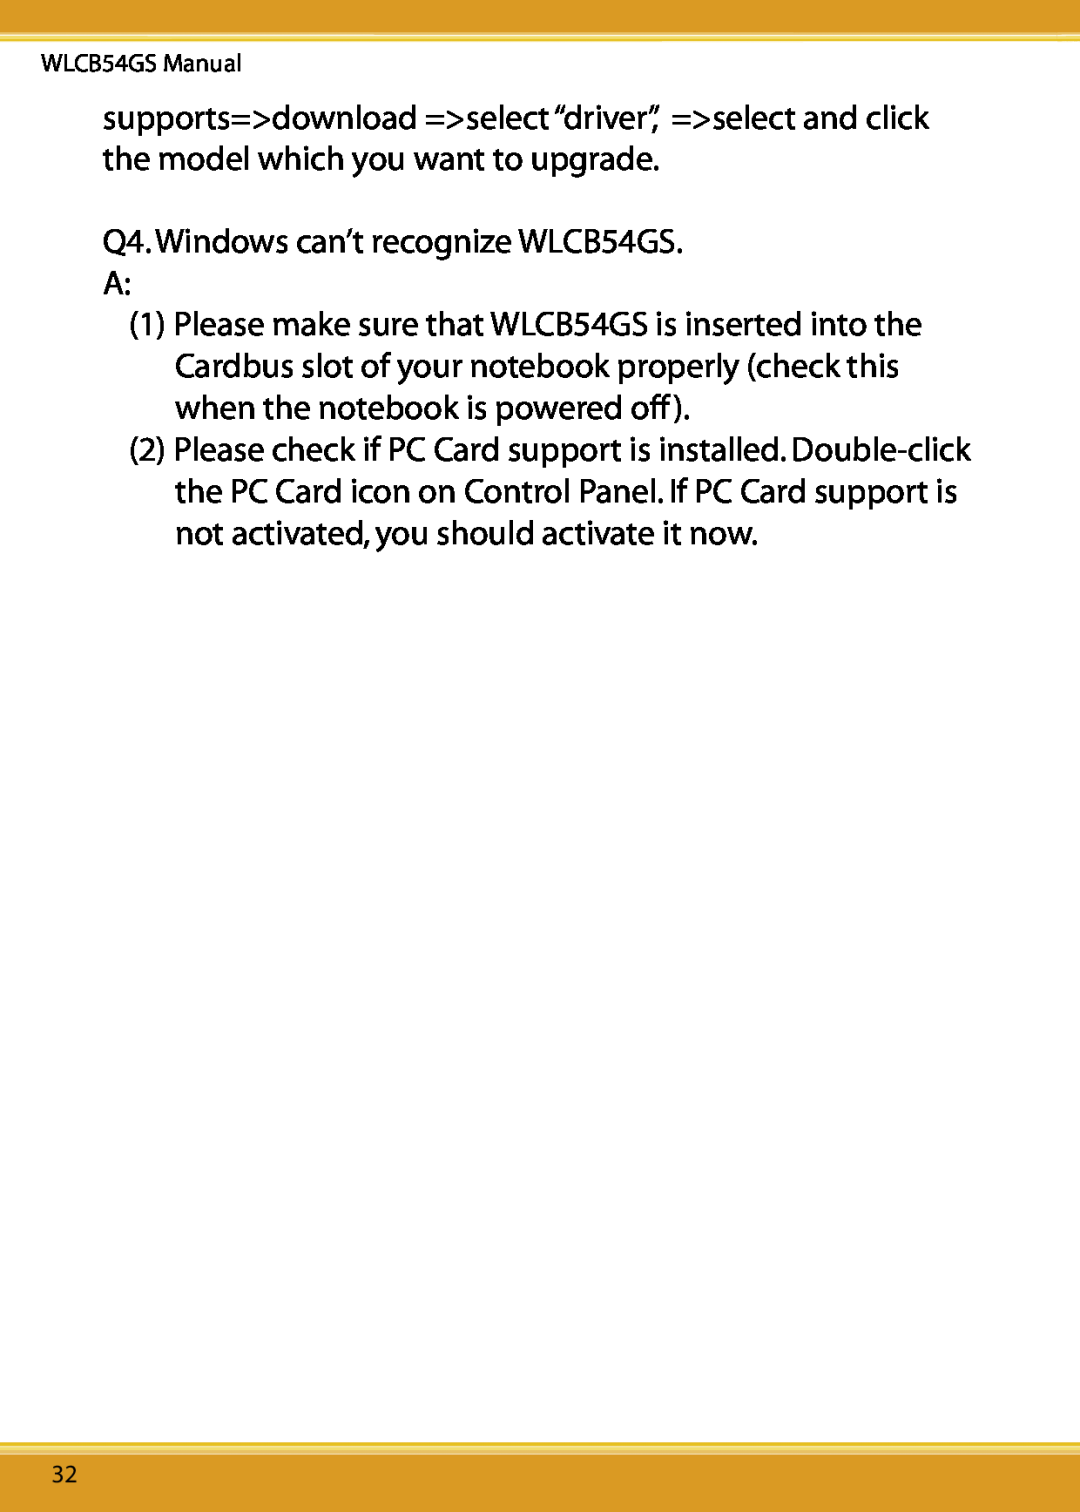 Corega 108M user manual Q4. Windows can’t recognize WLCB54GS A 